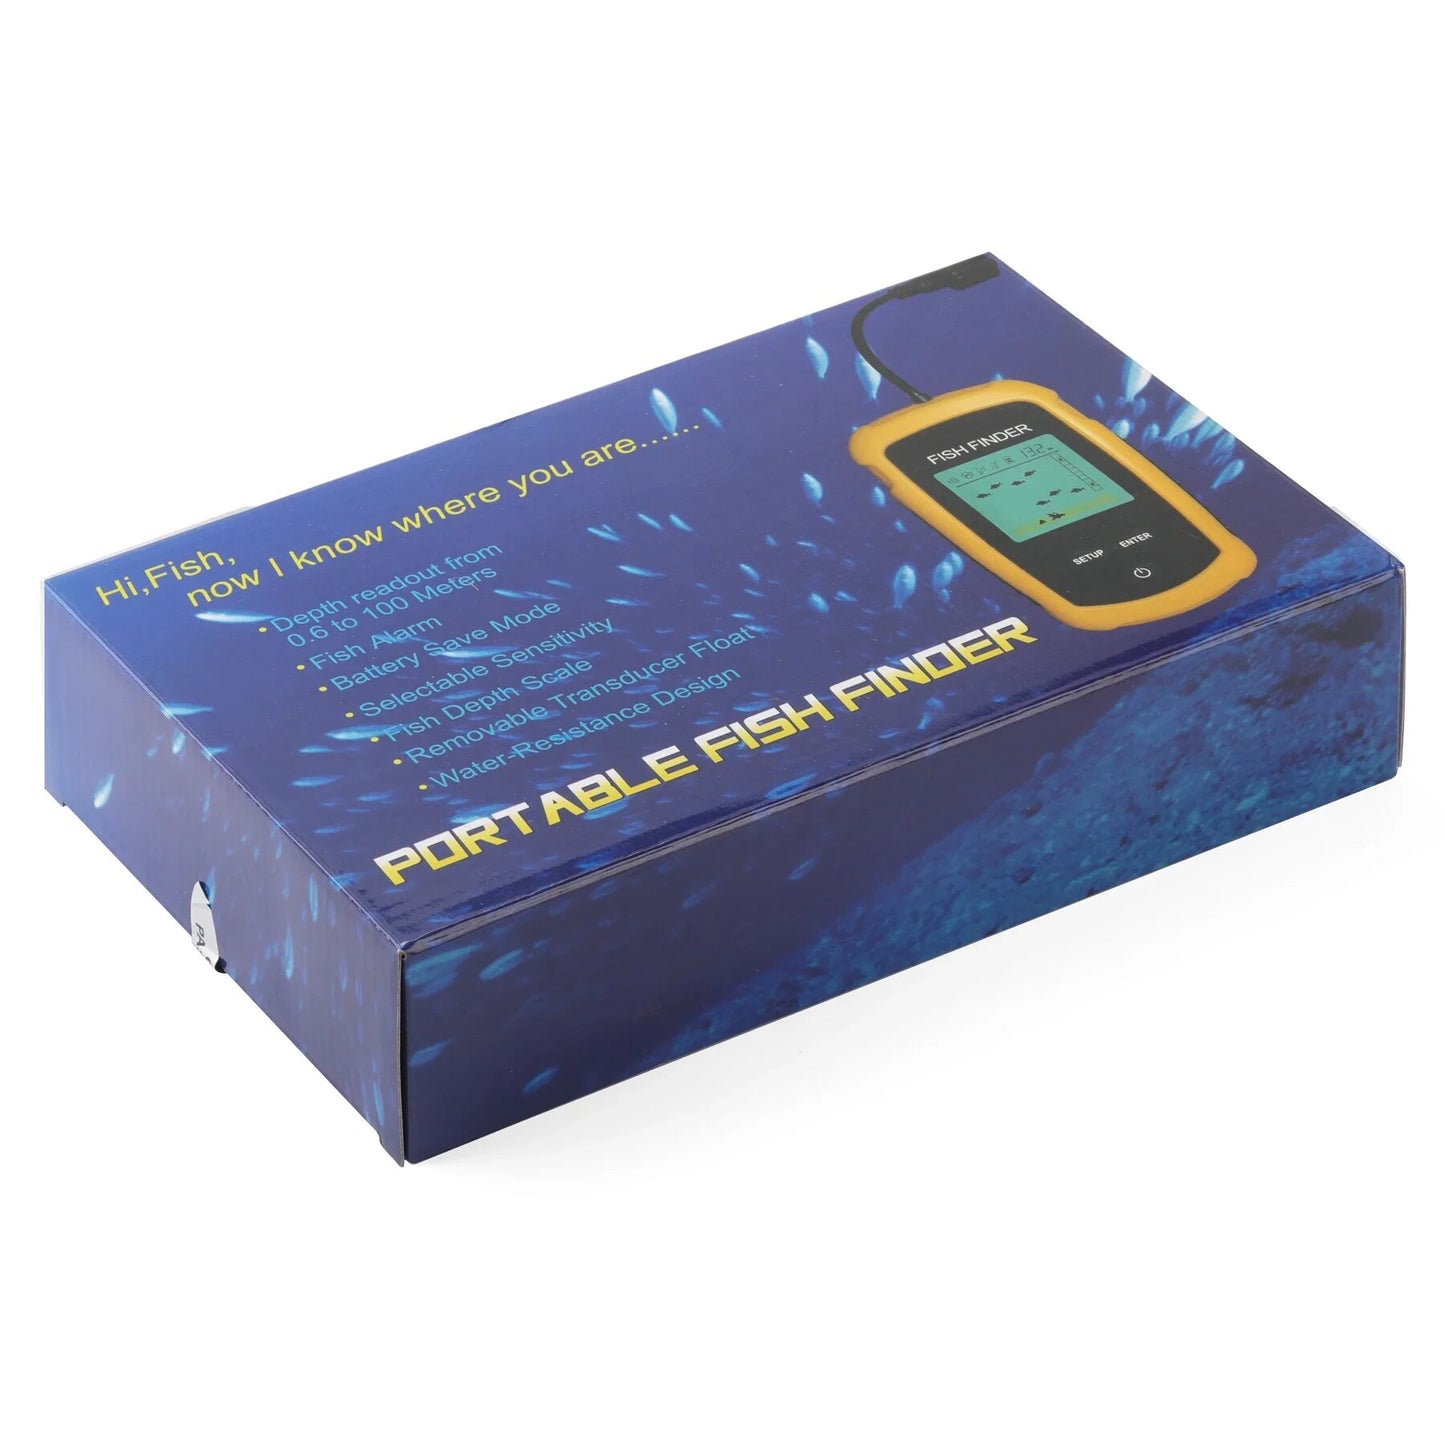 Matsutec GF-600 sem fio sonar alerta de pesca localizador de peixes subaquático ecobatímetro detector de pesca portátil localizador de peixes